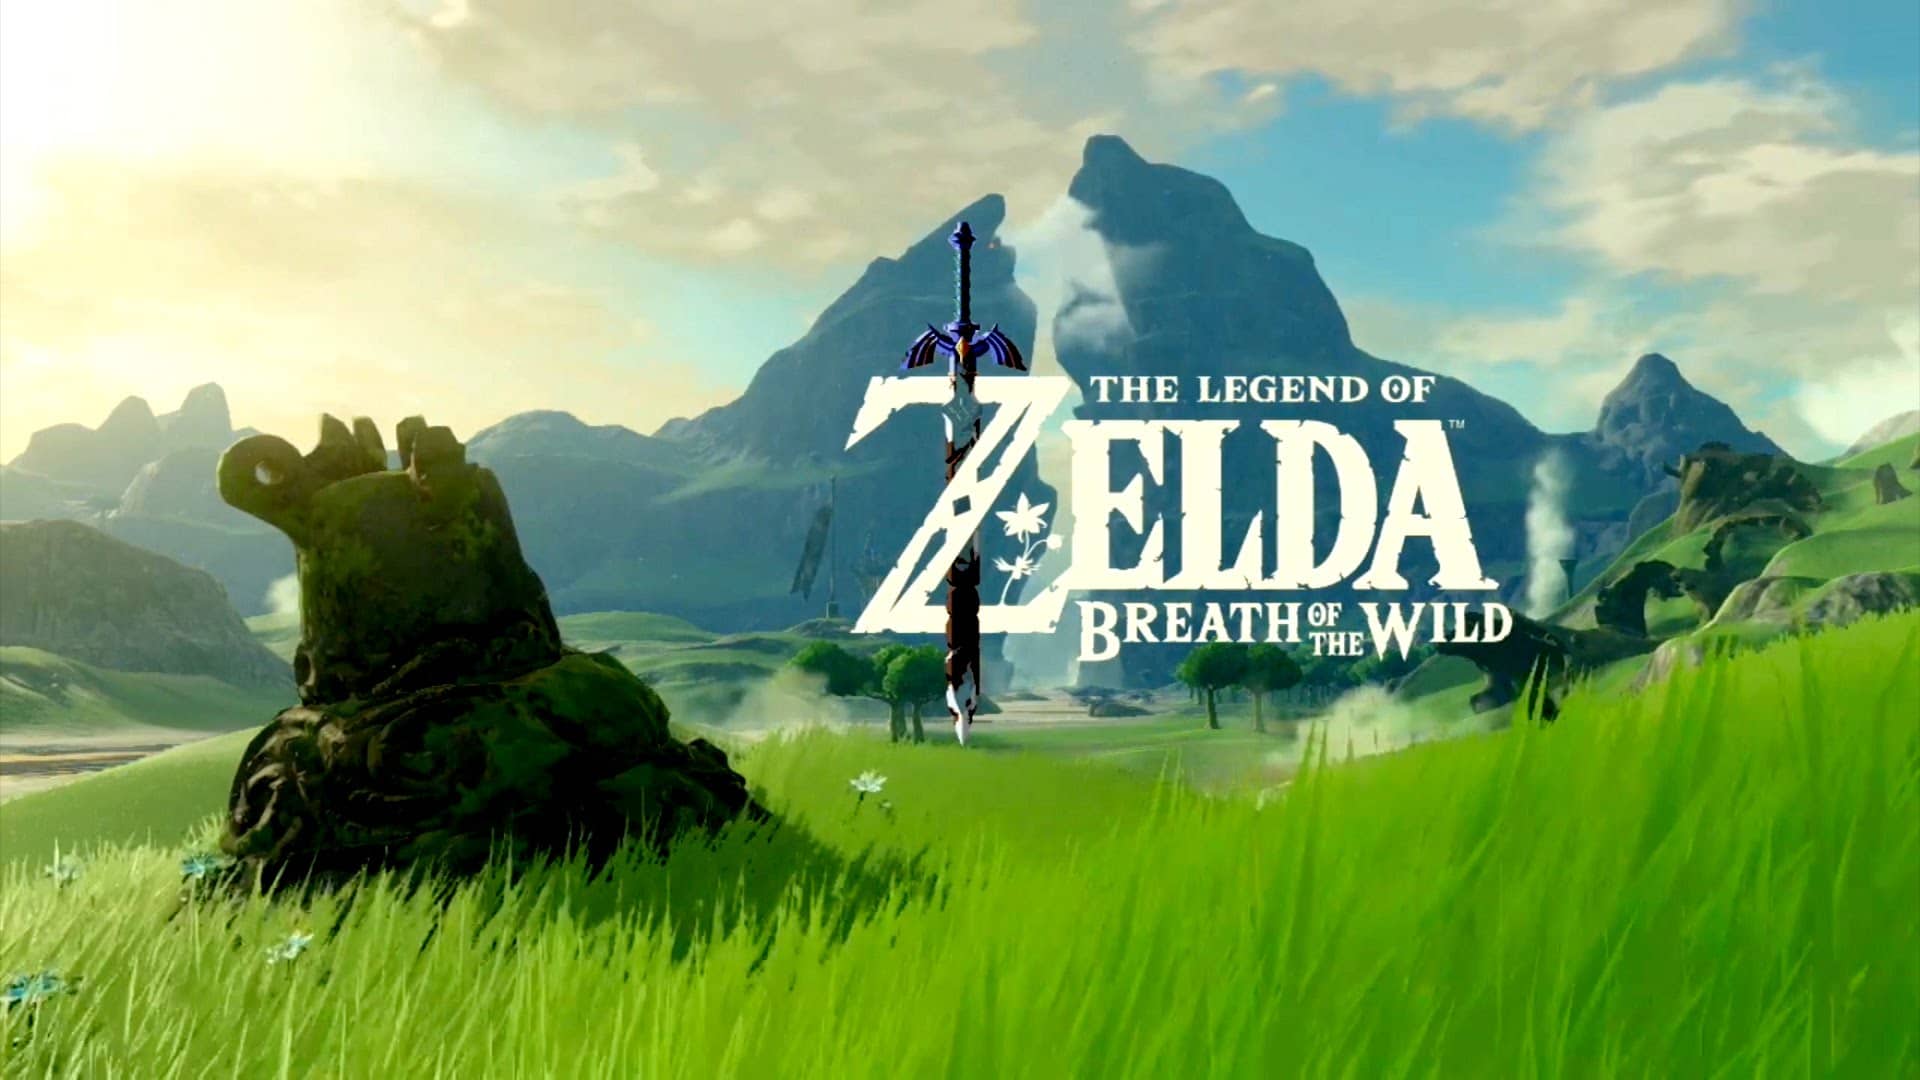 Un pequeño homenaje a Satoru Iwata en The Legend of Zelda Breath of The Wild(1)